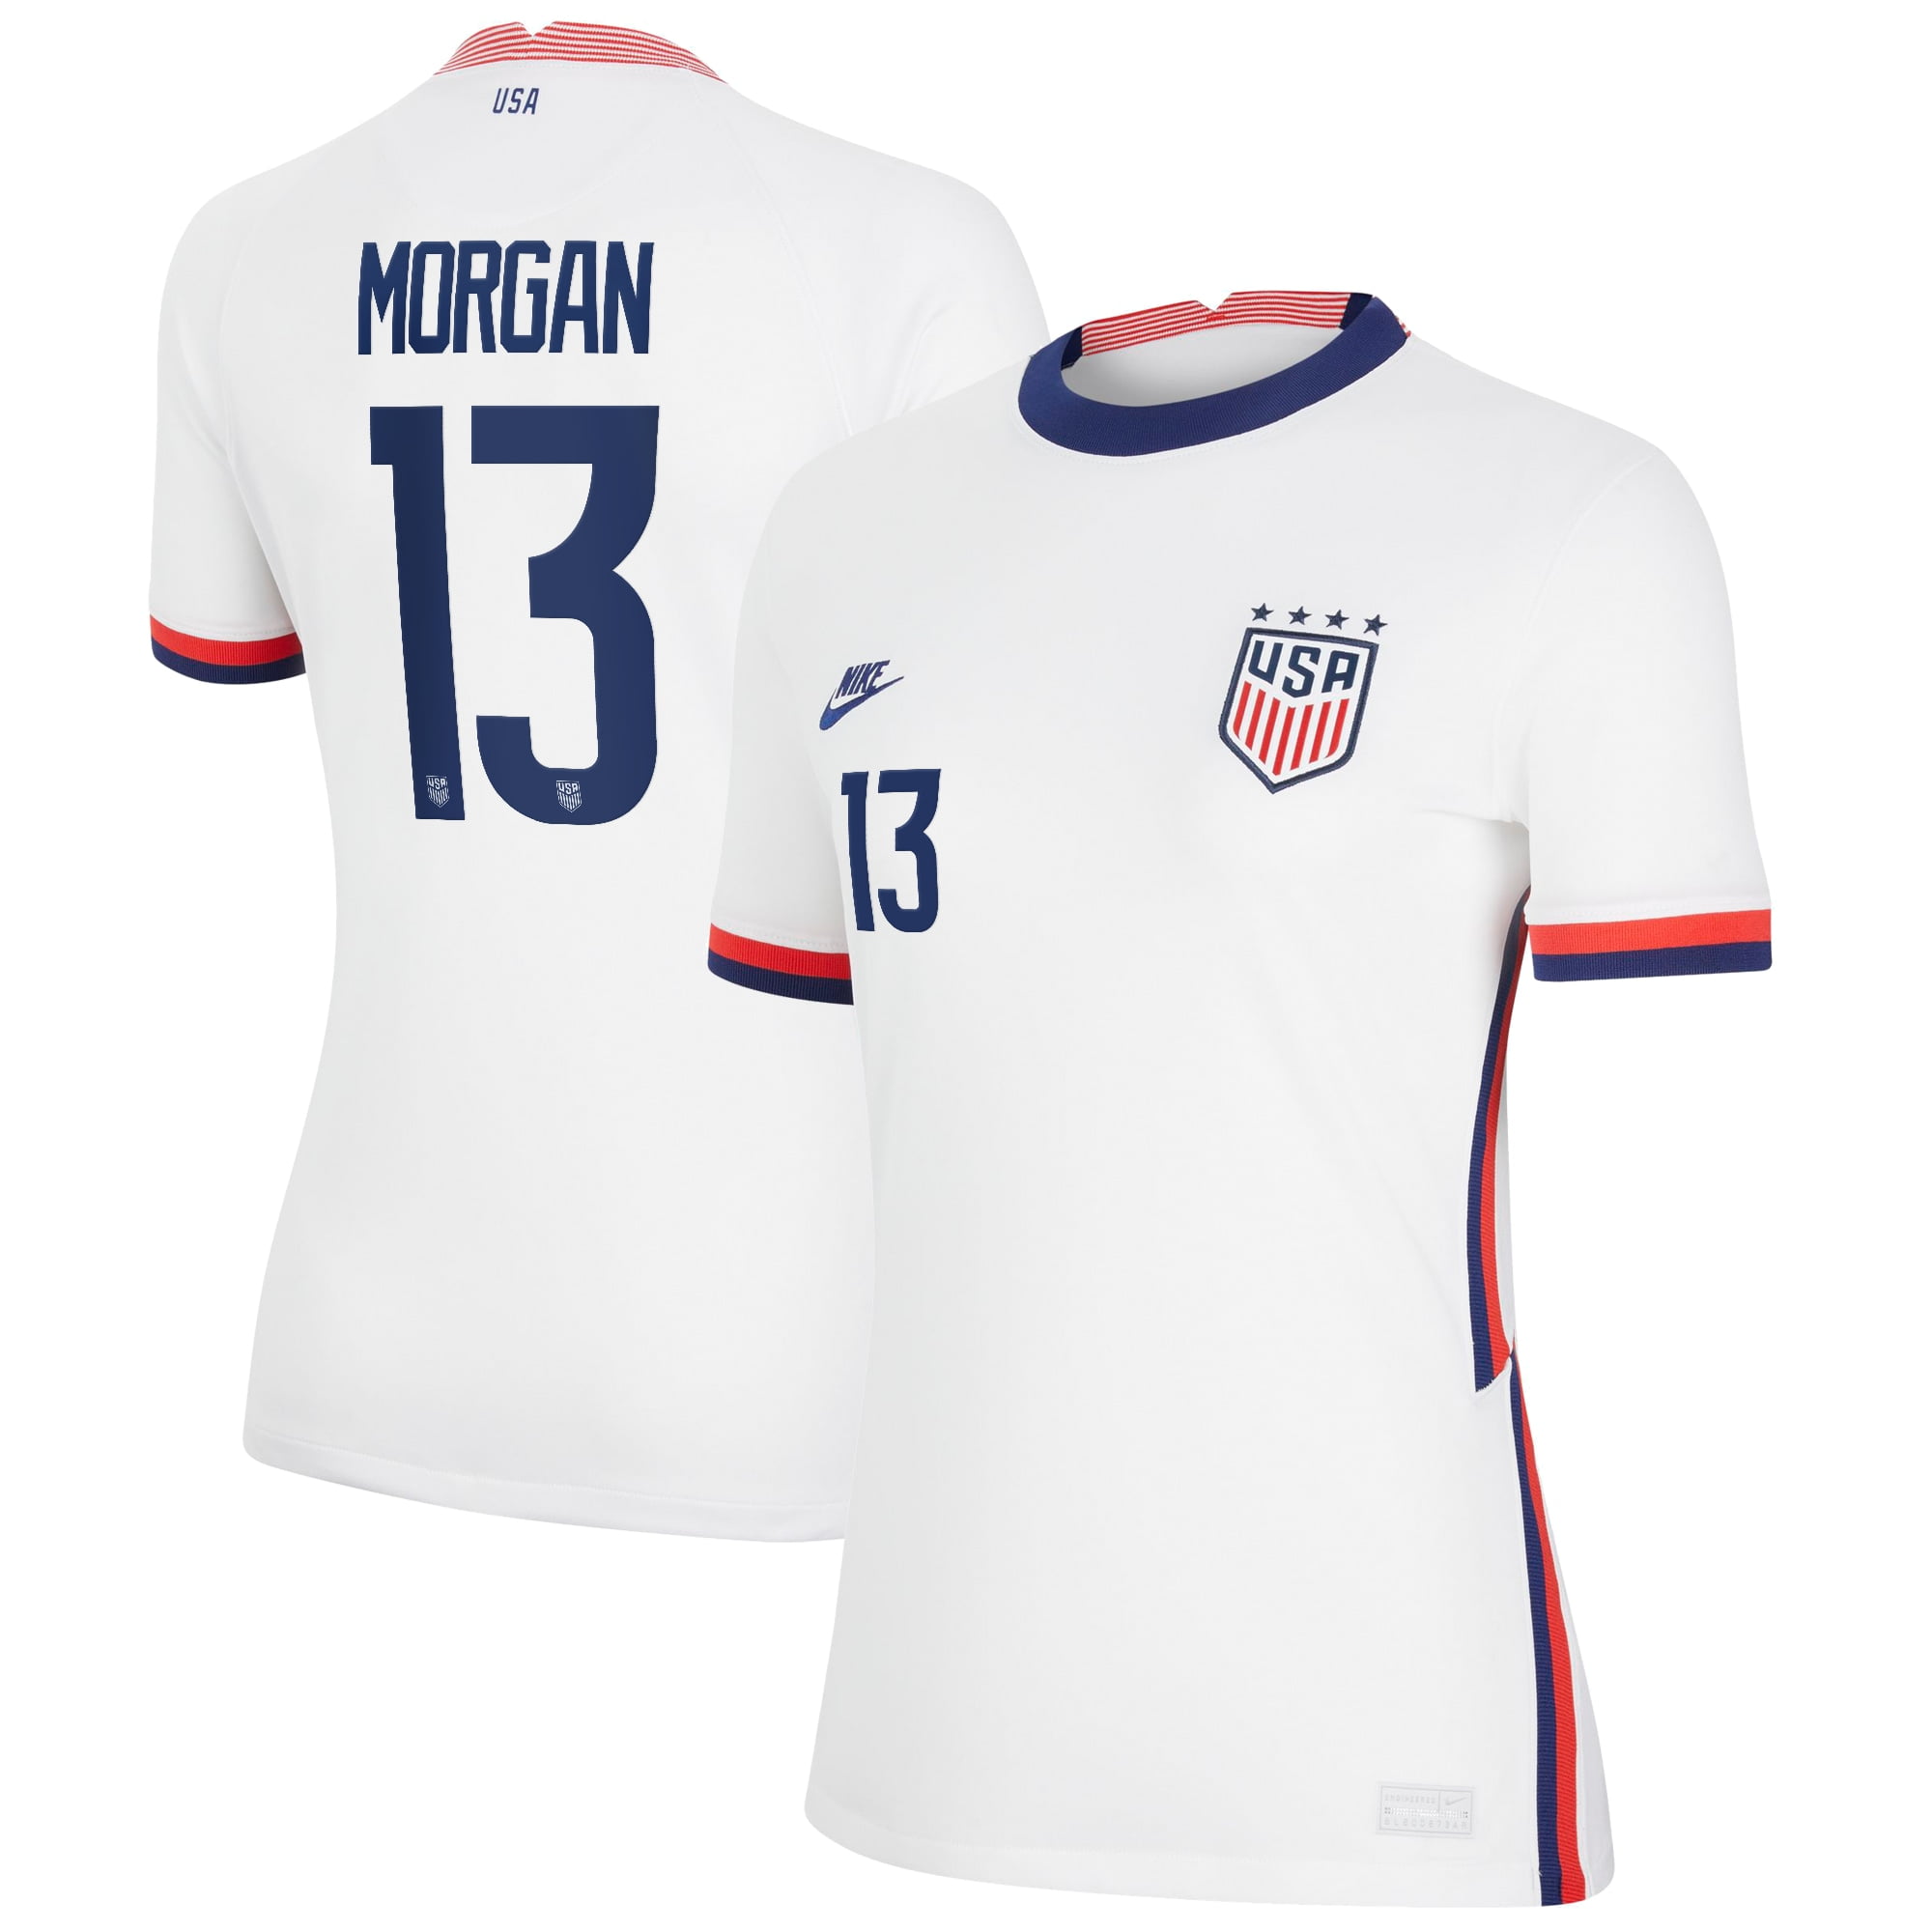 IconSports USA Morgan White Stadium Class Player Shirt for Women 